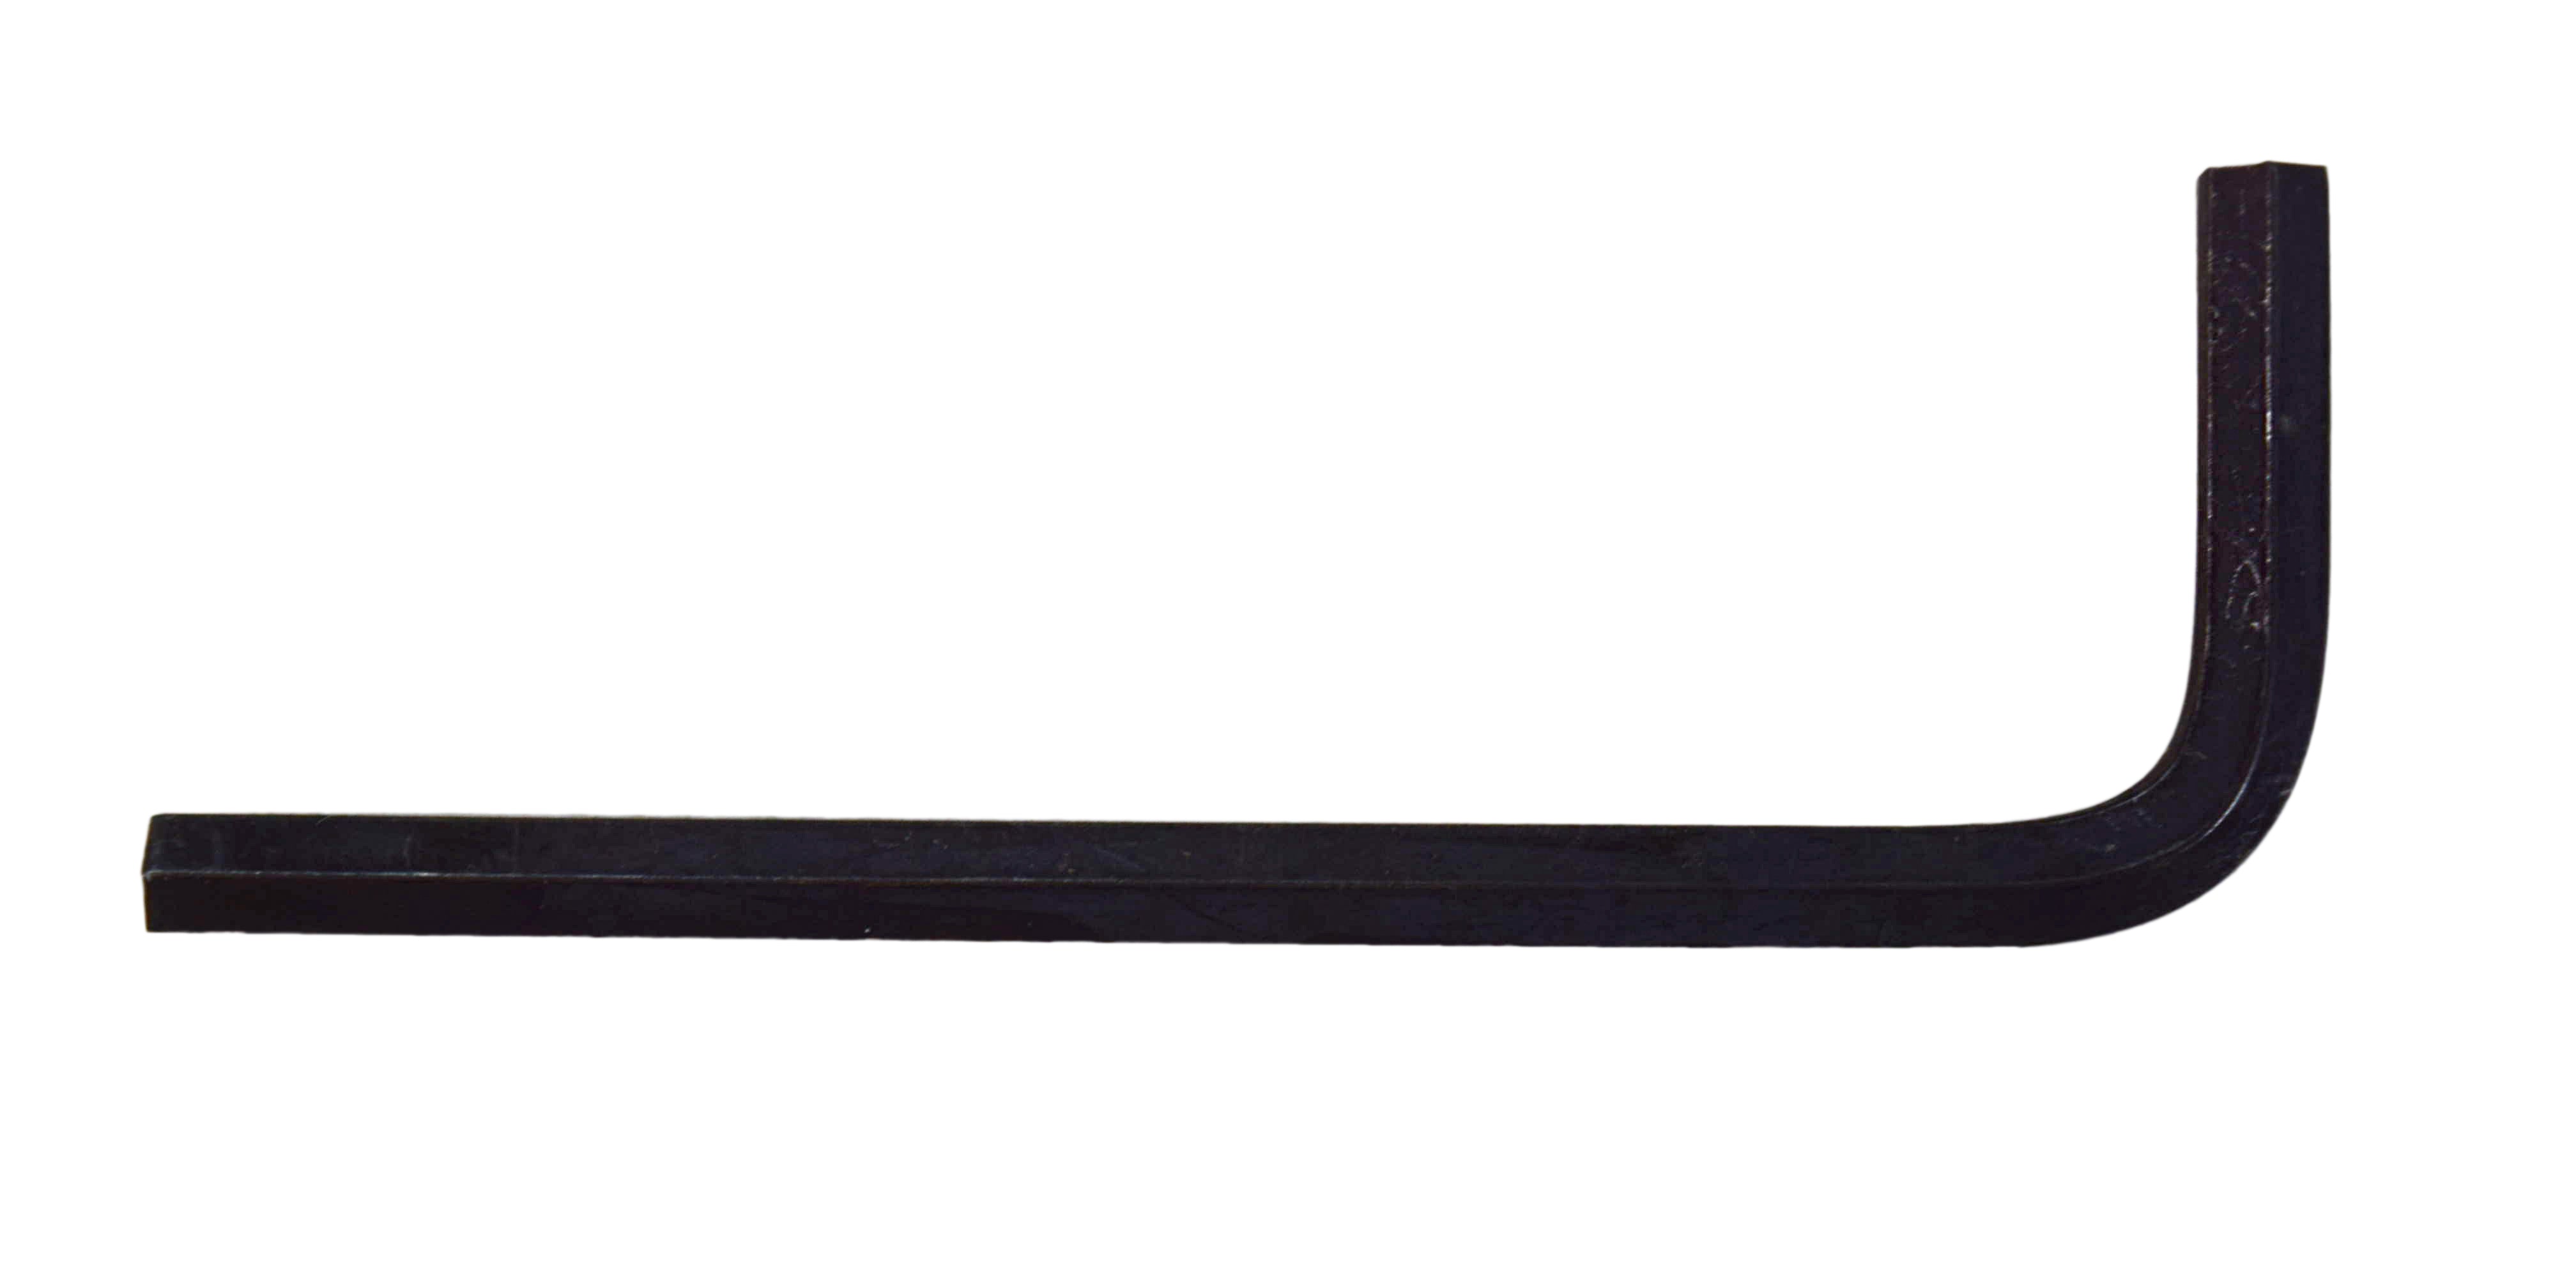 Topcon-B1-LS70-80-Laserline-Detector-Black-Anodized-Aluminum-Brackets-image-4